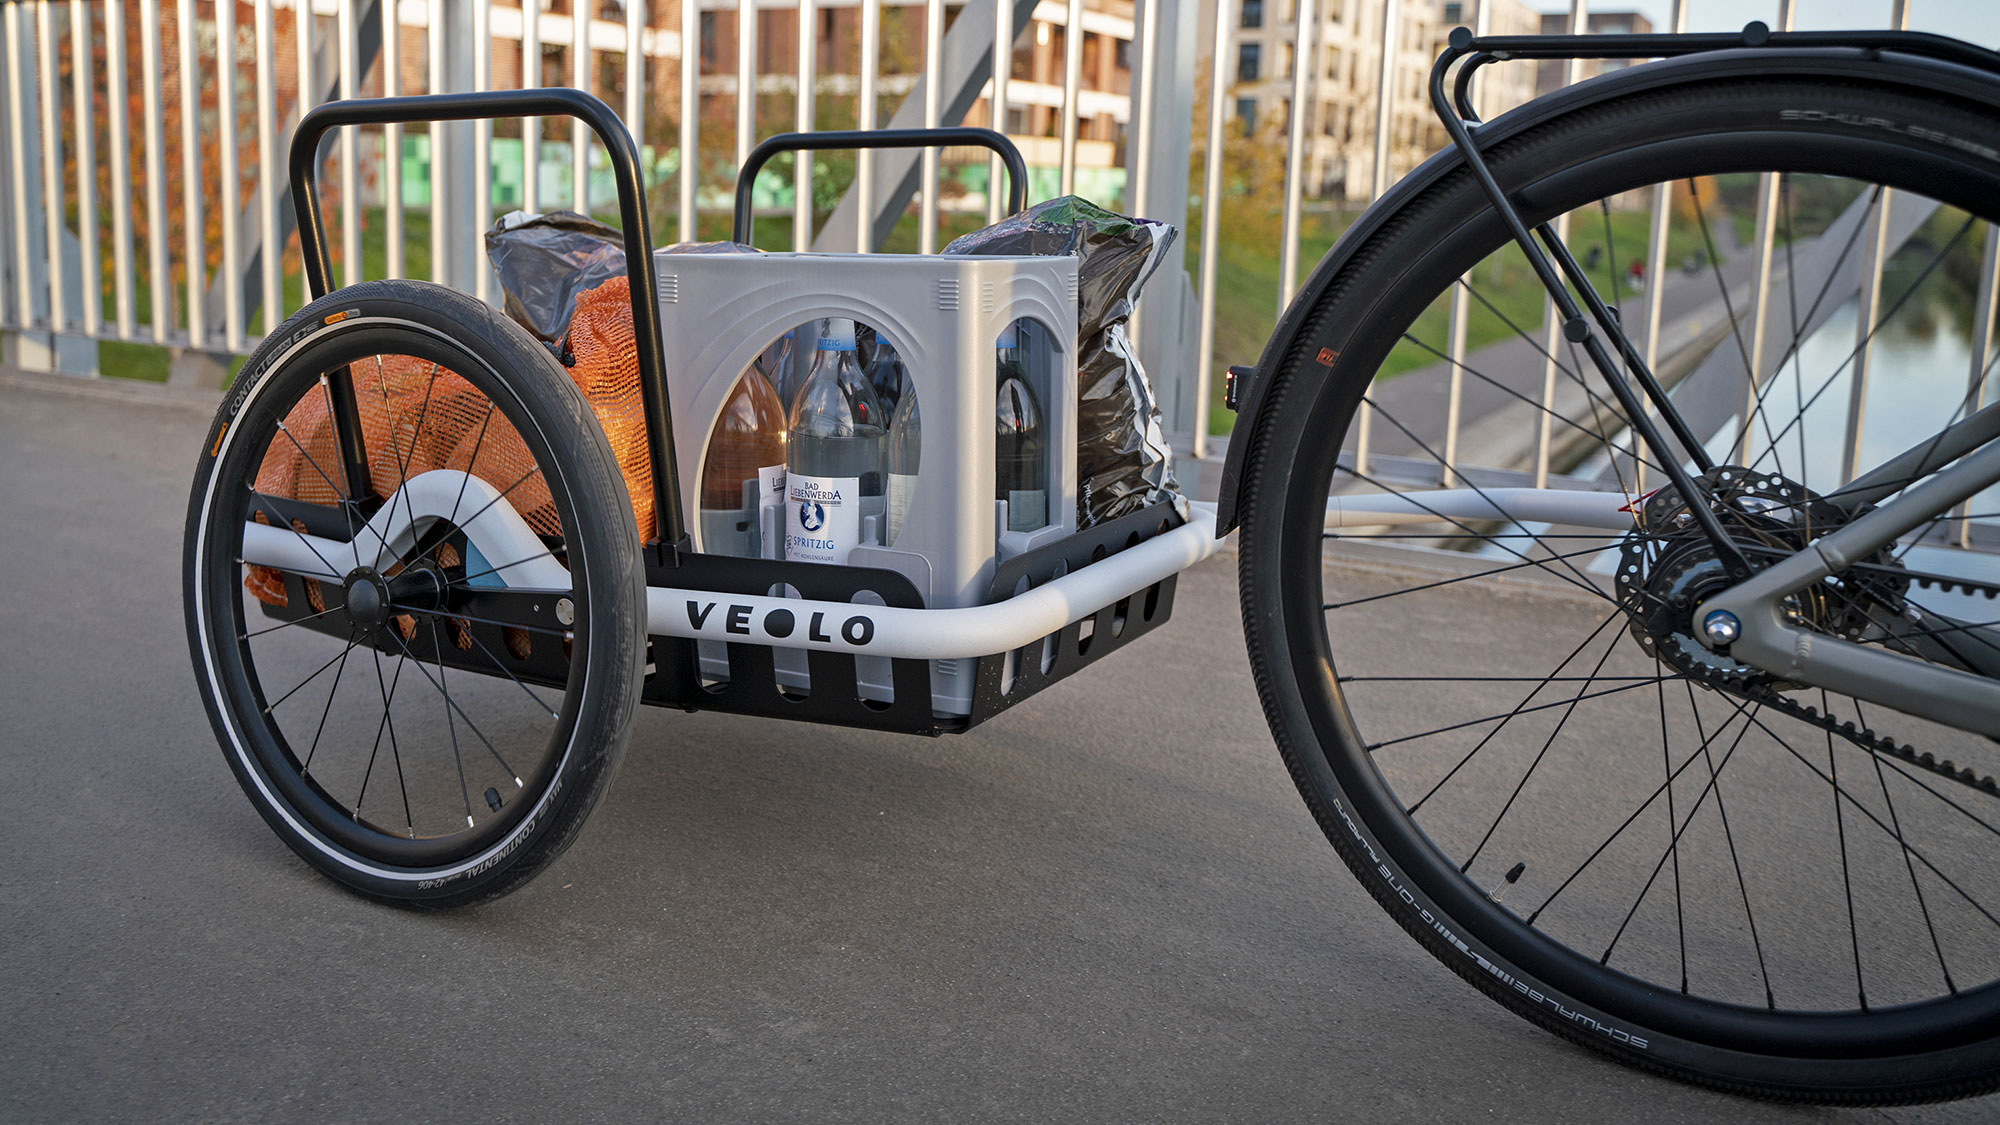 Veolo Bike Trailer, a lightweight modular bicycle cargo trailer vs. a cargo bike